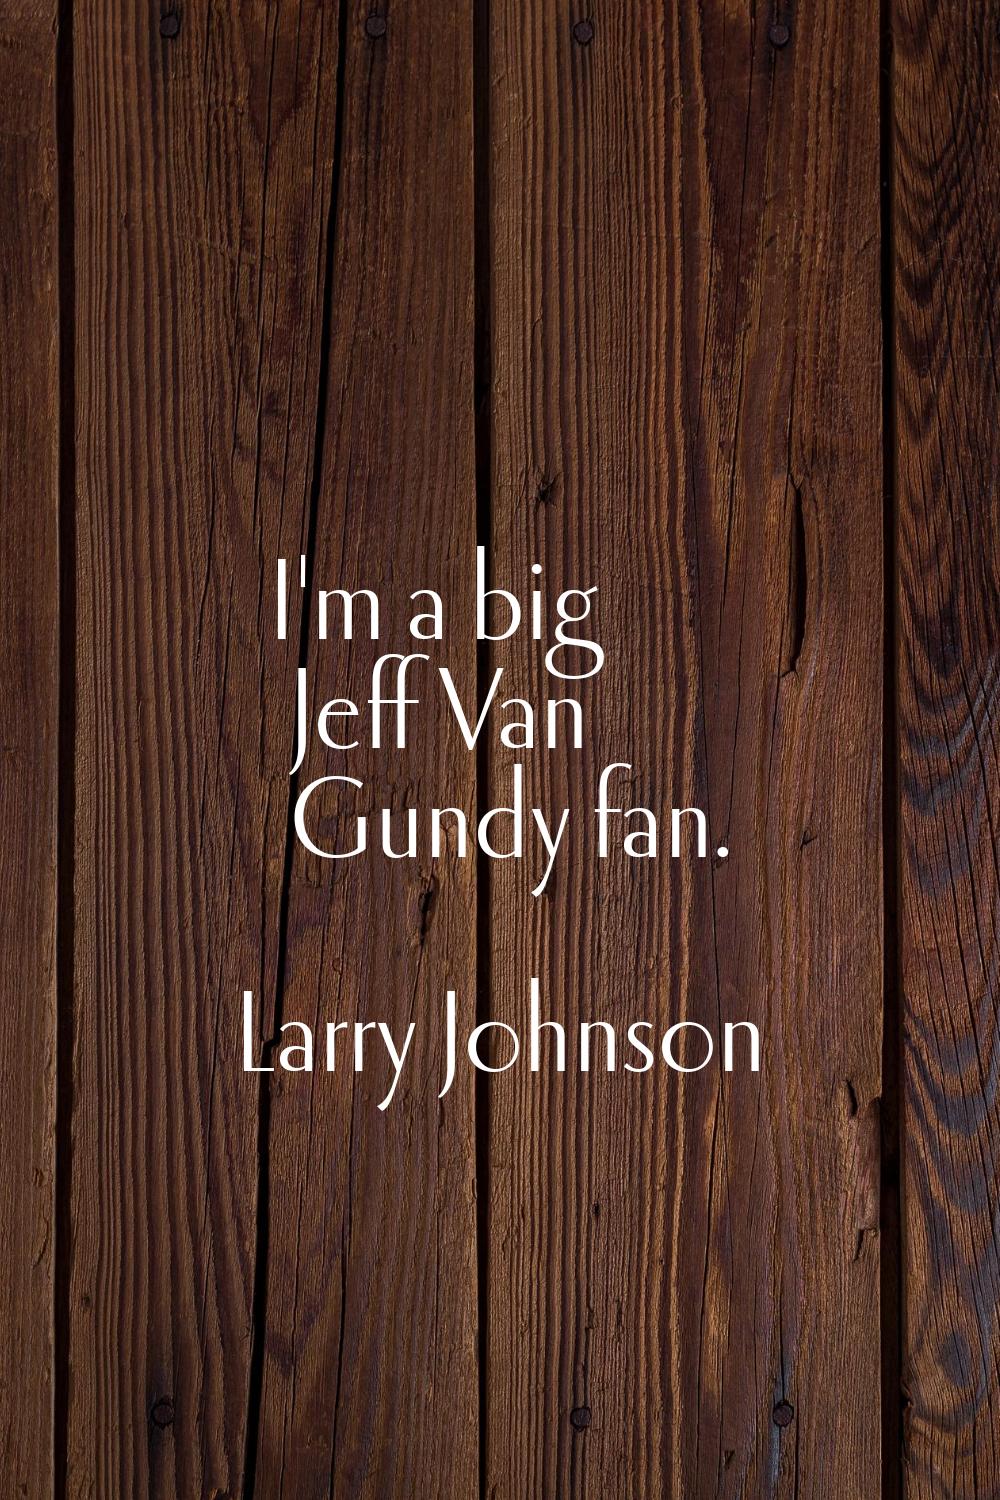 I'm a big Jeff Van Gundy fan.